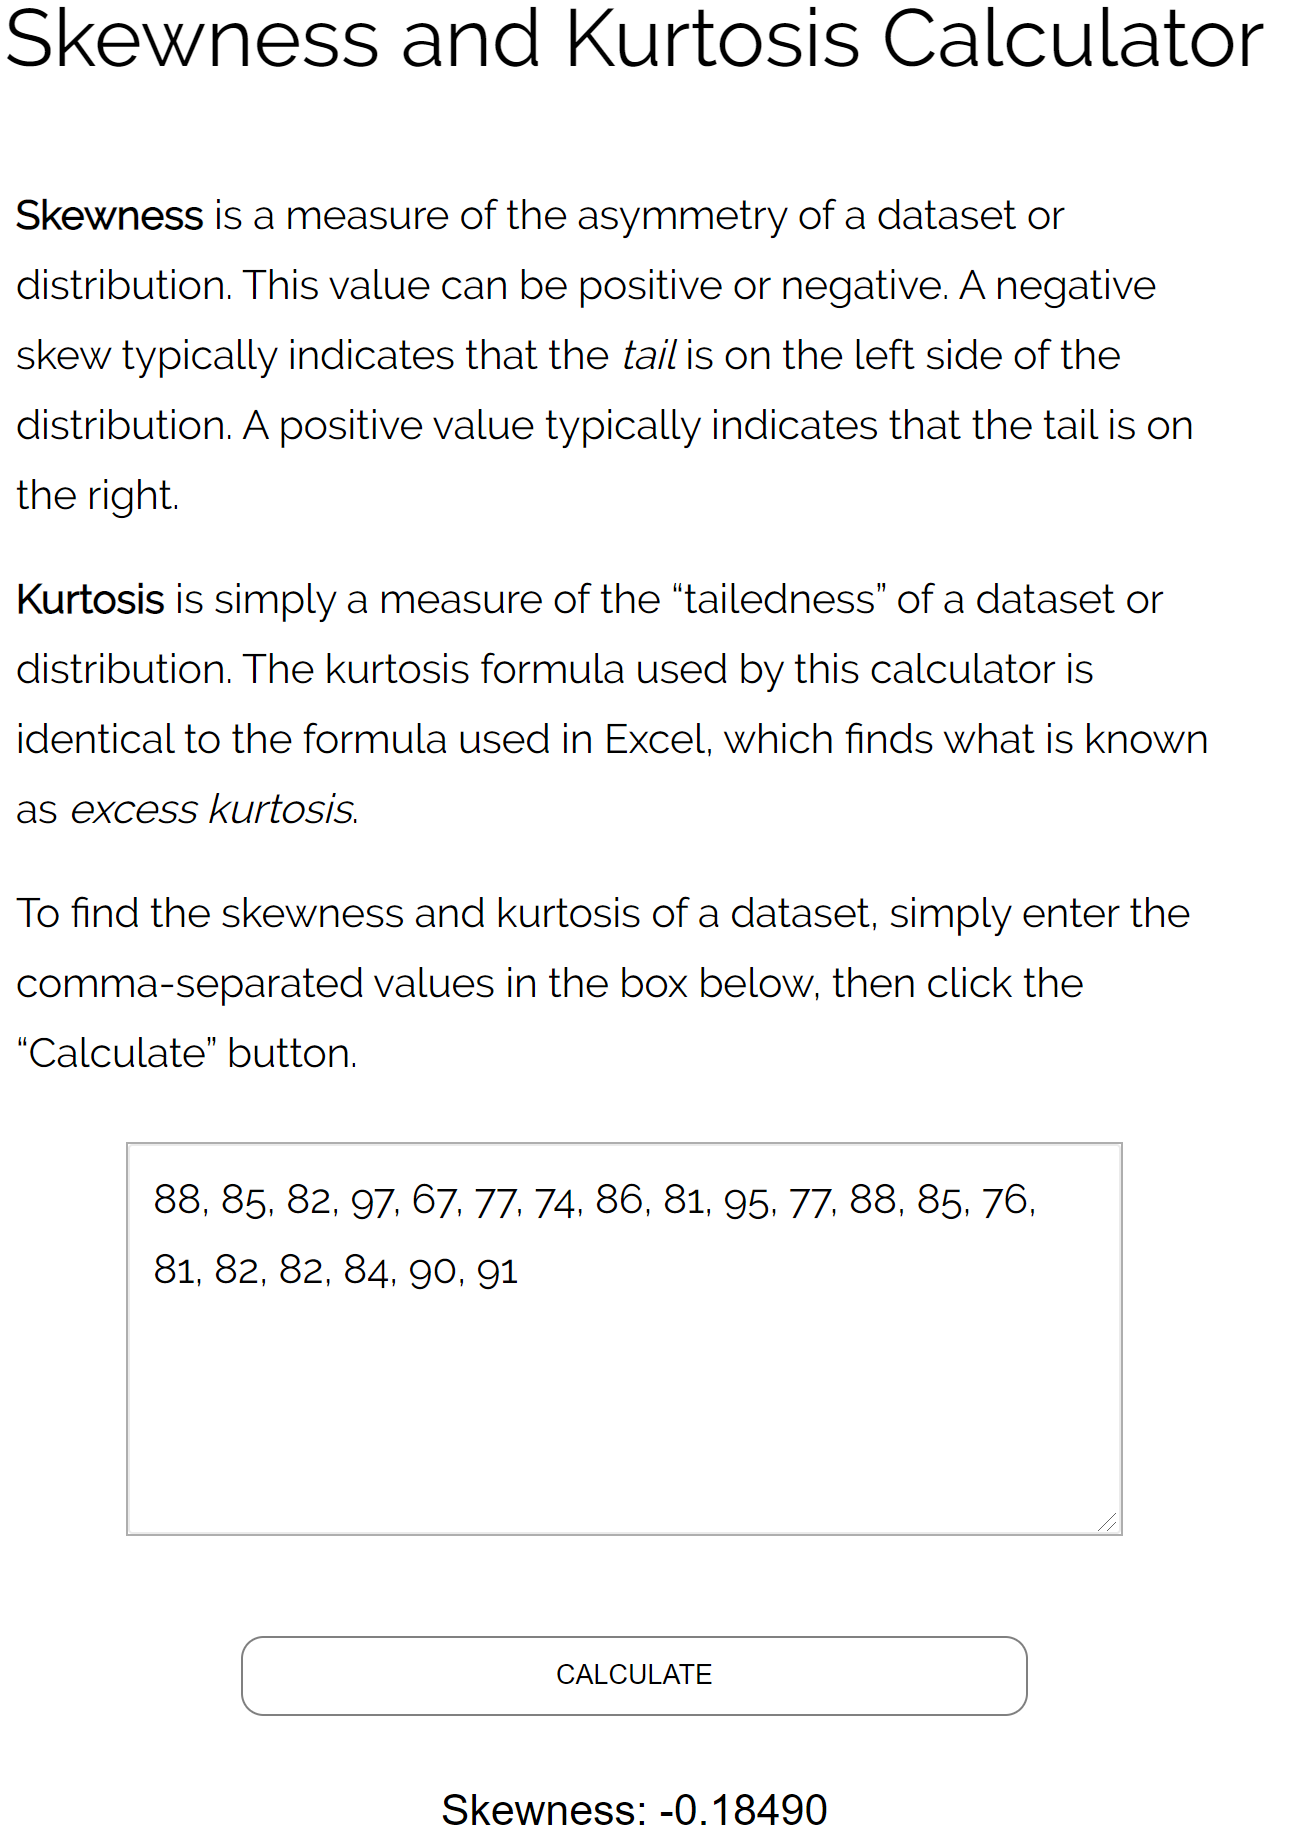 Exemplo de calculadora de assimetria